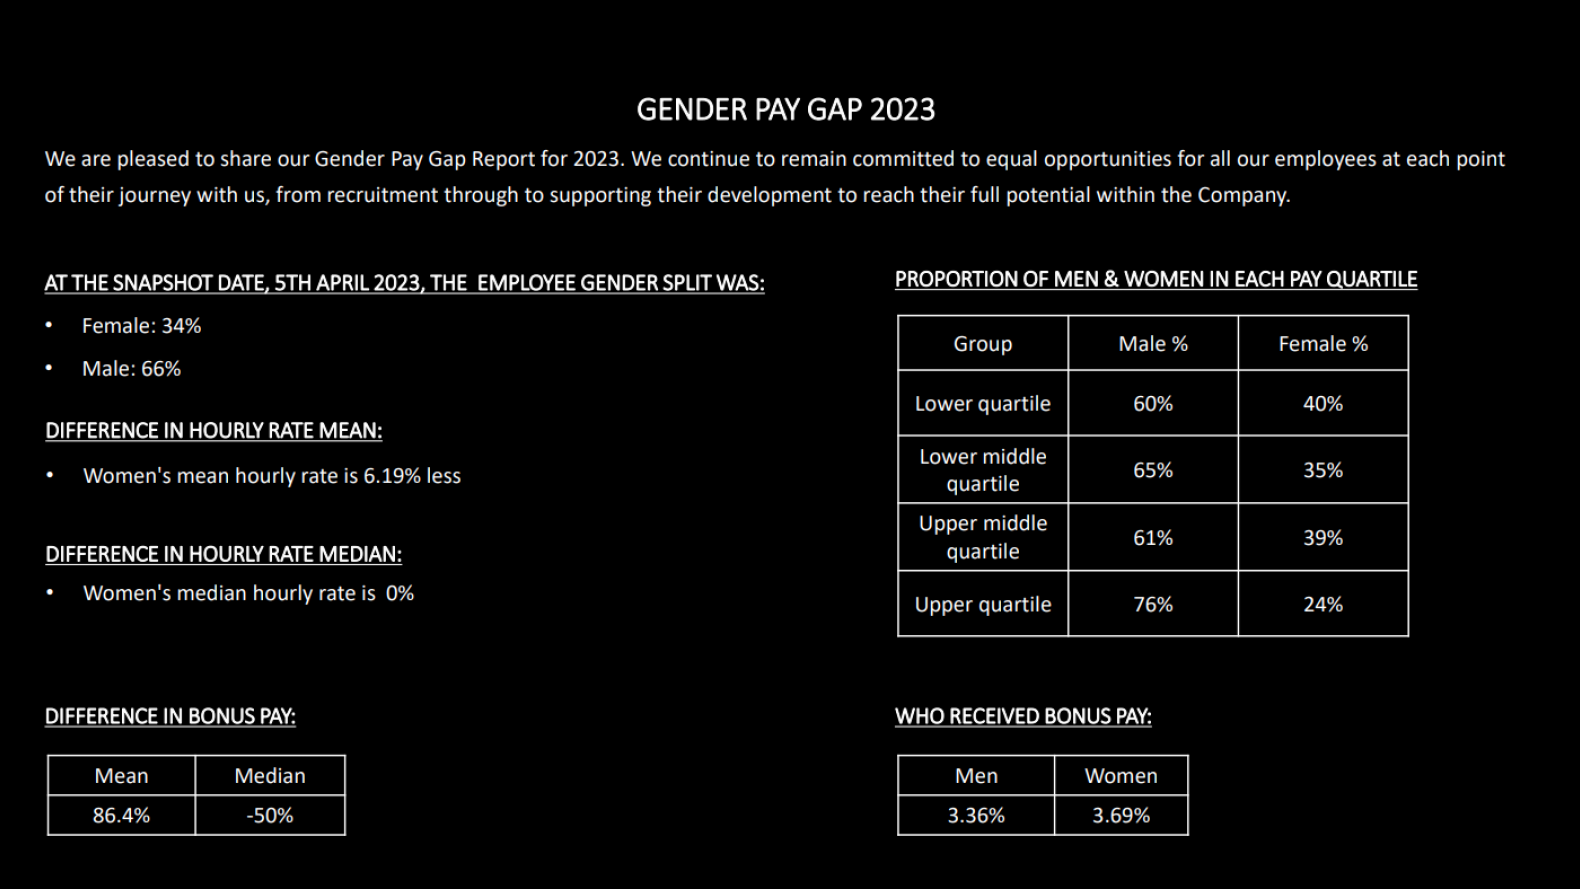 GENDER PAY GAP REPORT 2023